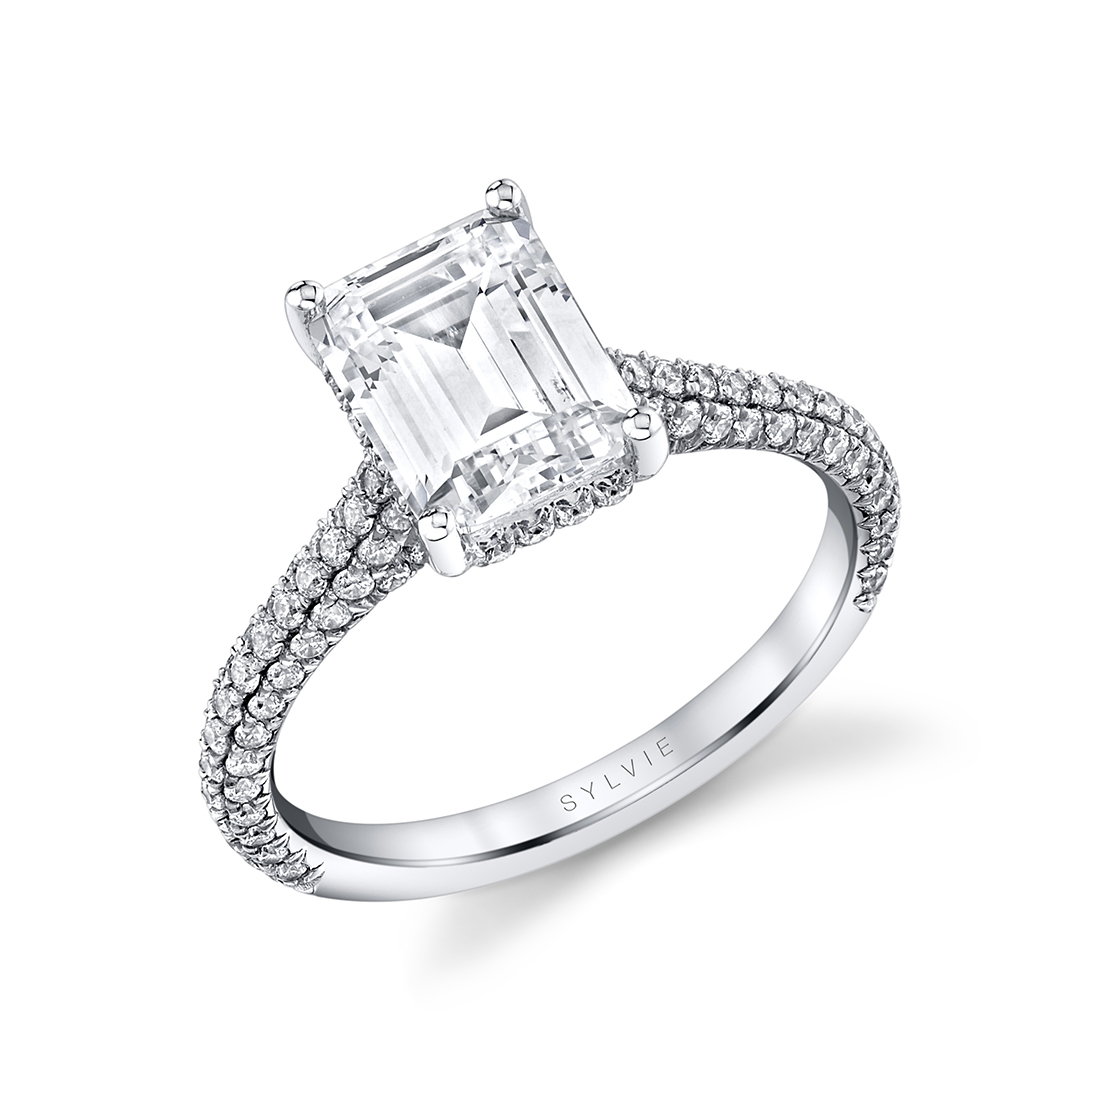 2 carat Halo Diamond Engagement Ring - Ascot Diamonds | Engagement rings,  Dream engagement rings, Beautiful engagement rings